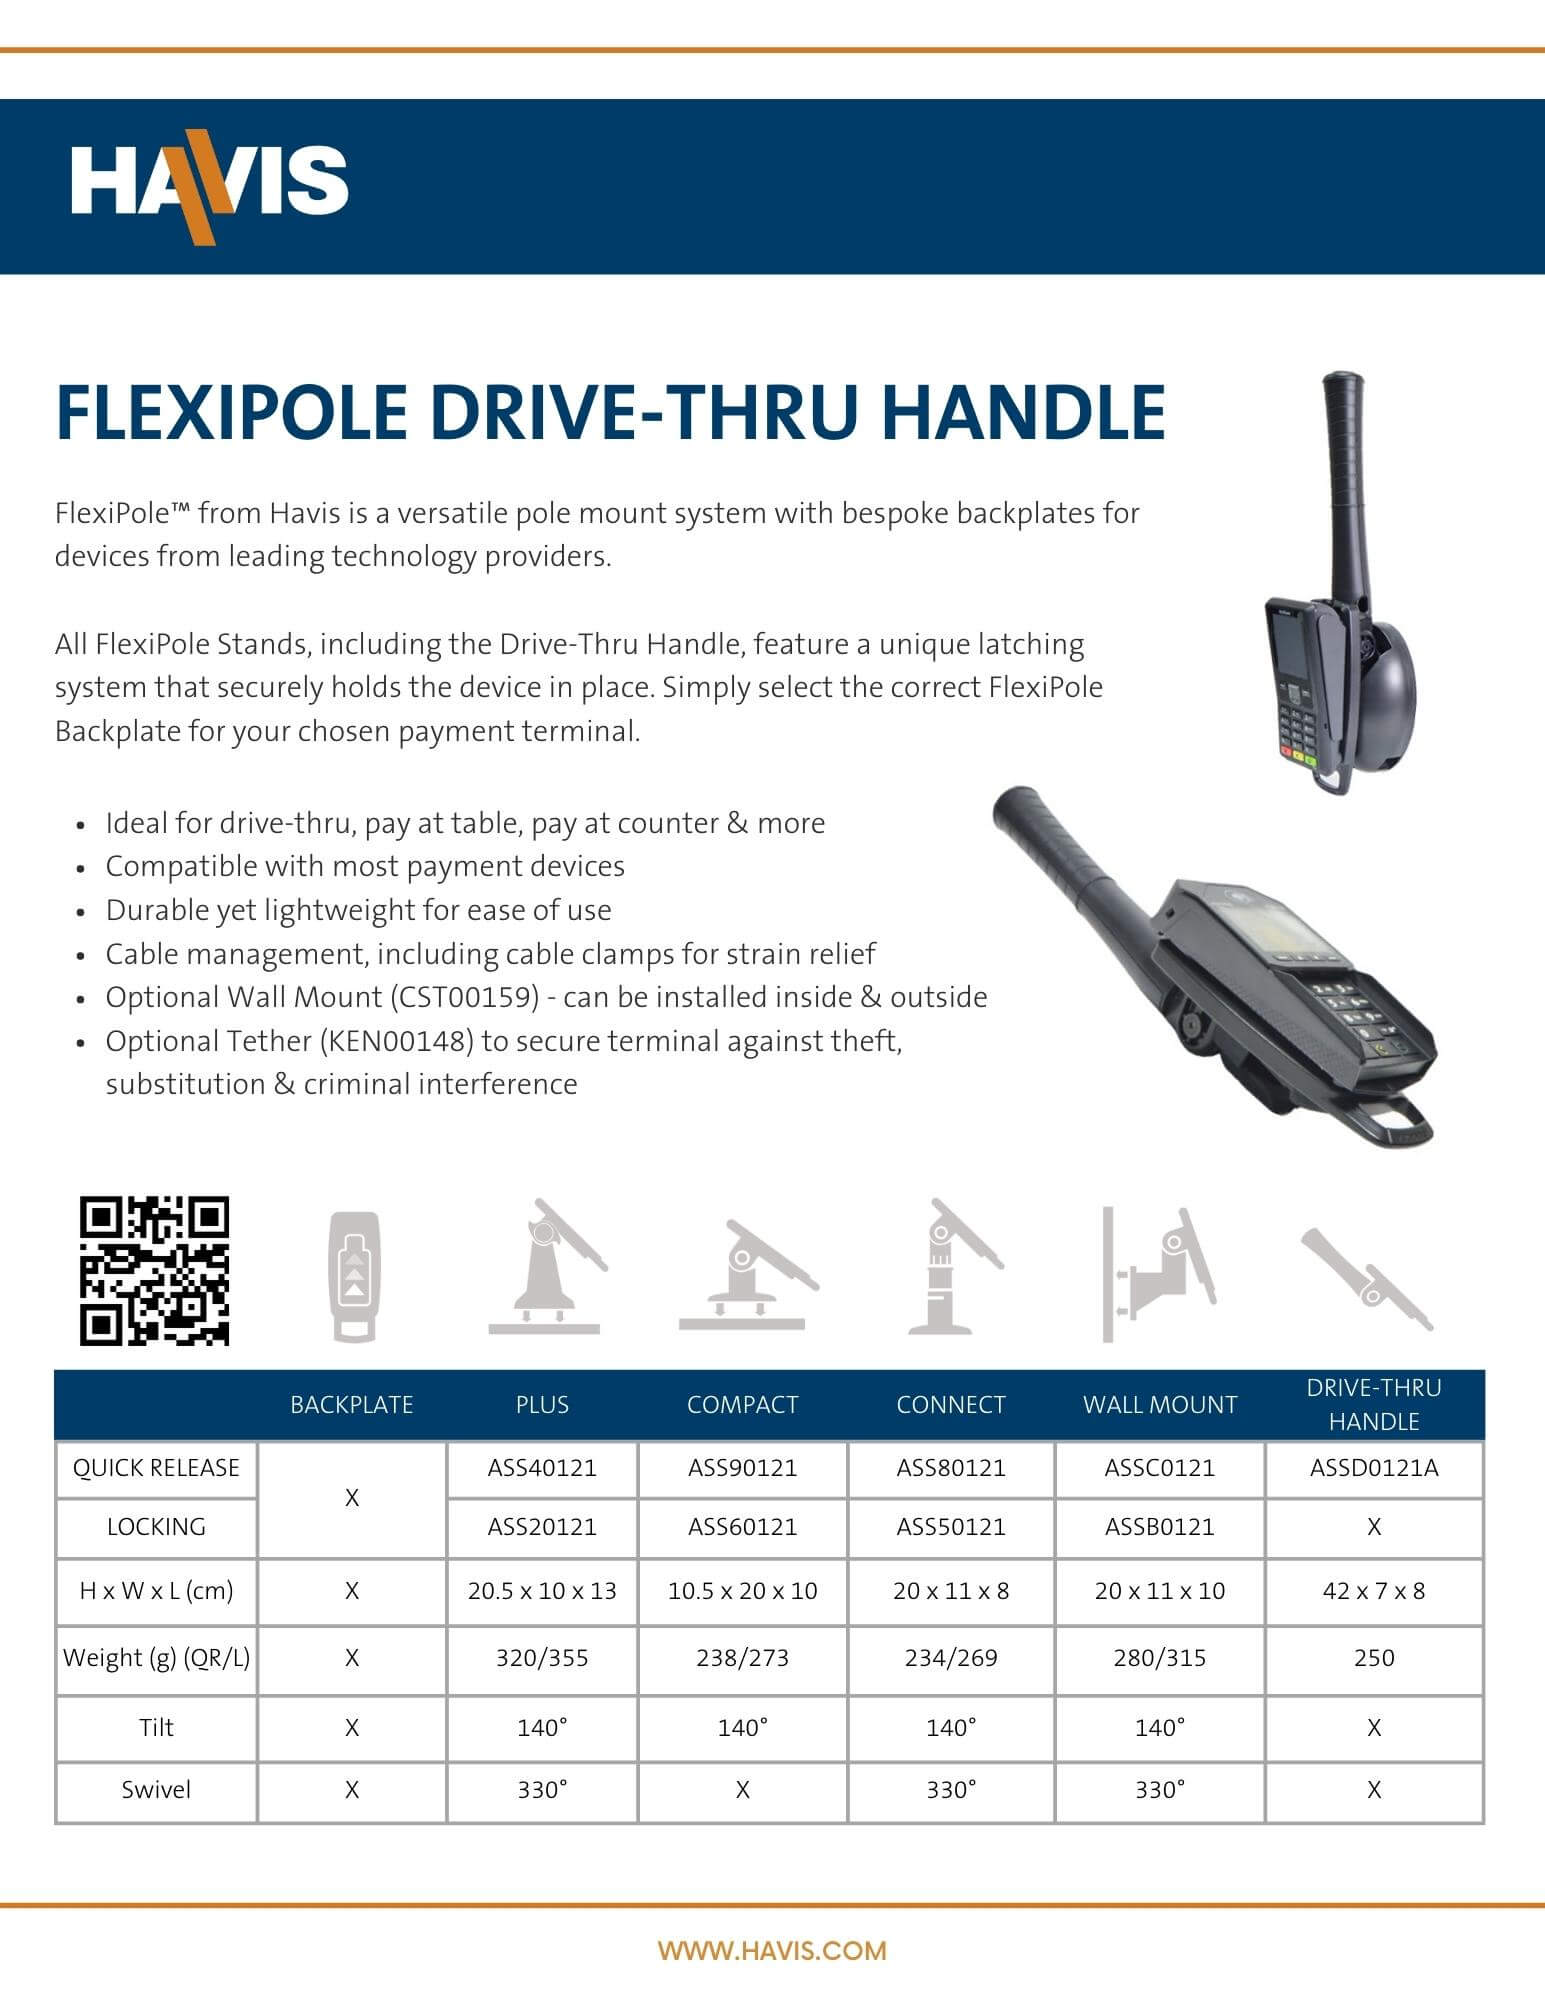 FlexiPole Drive-Thru Handle